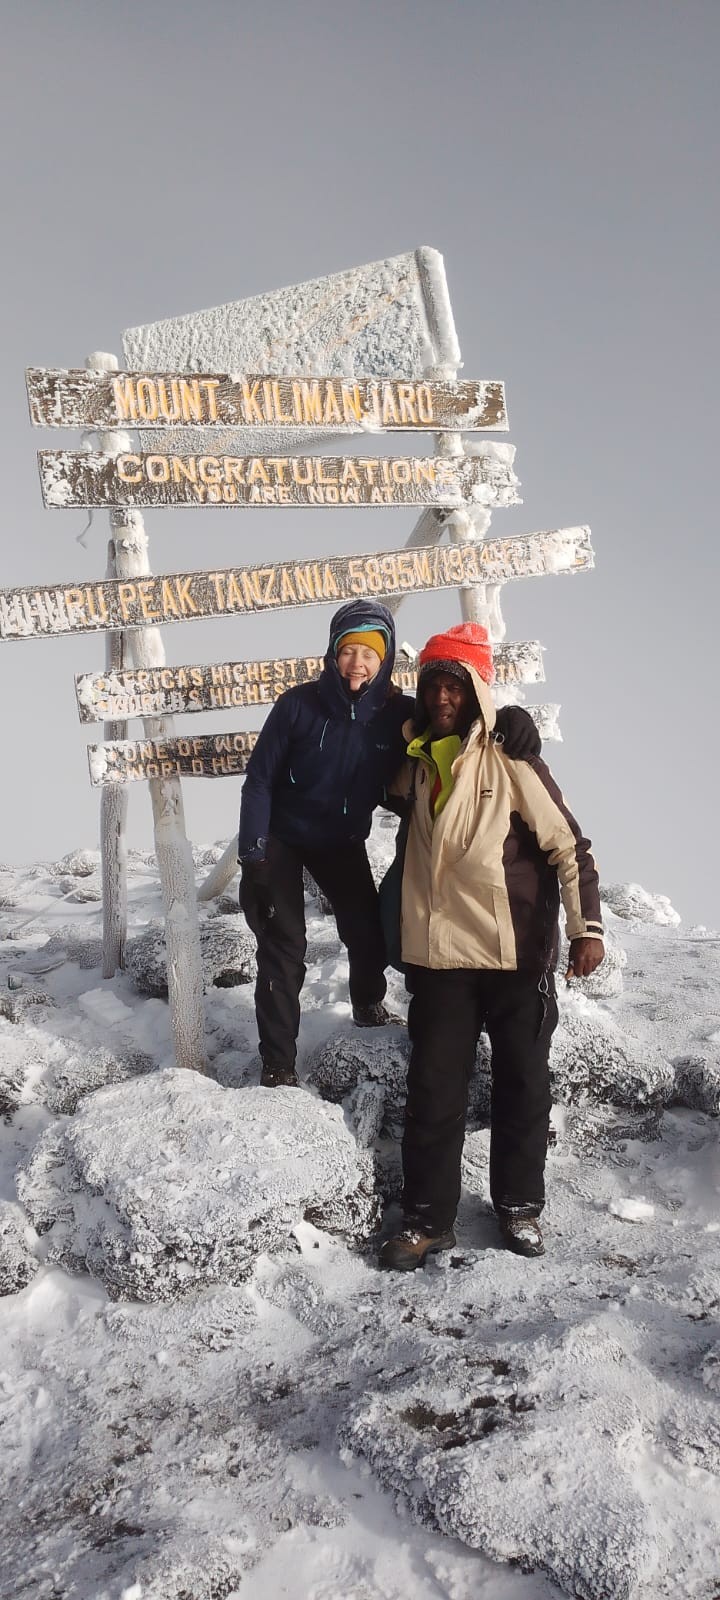 Climbing mount kilimanjaro trekking hiking active adventures epic tours safaris yha kenya travel mountain adventures tanzania tours 8 